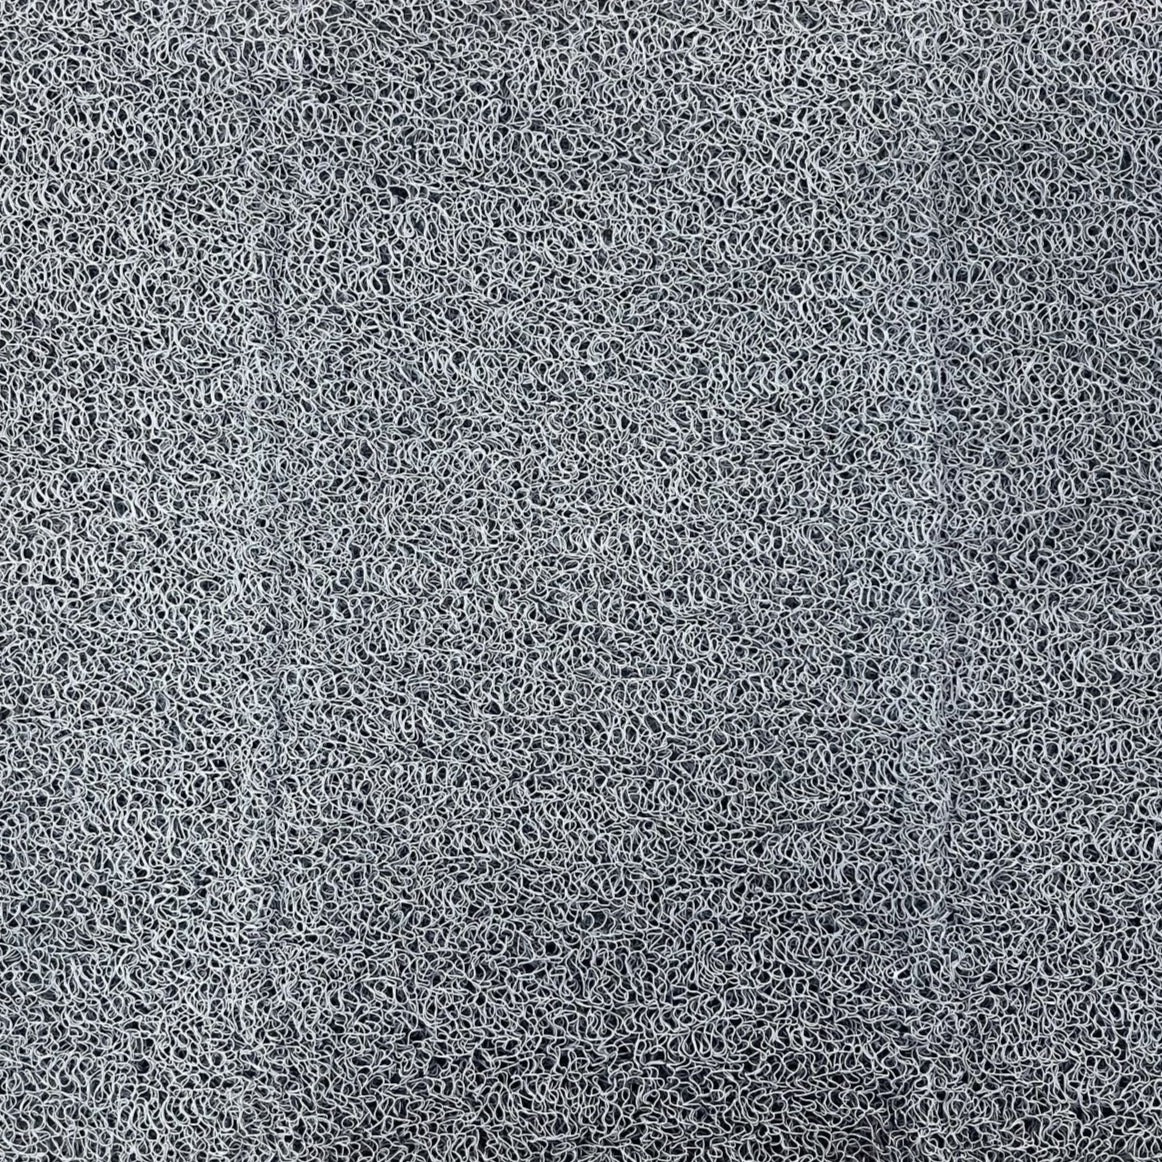 Close up image of hydro mat grey fibres